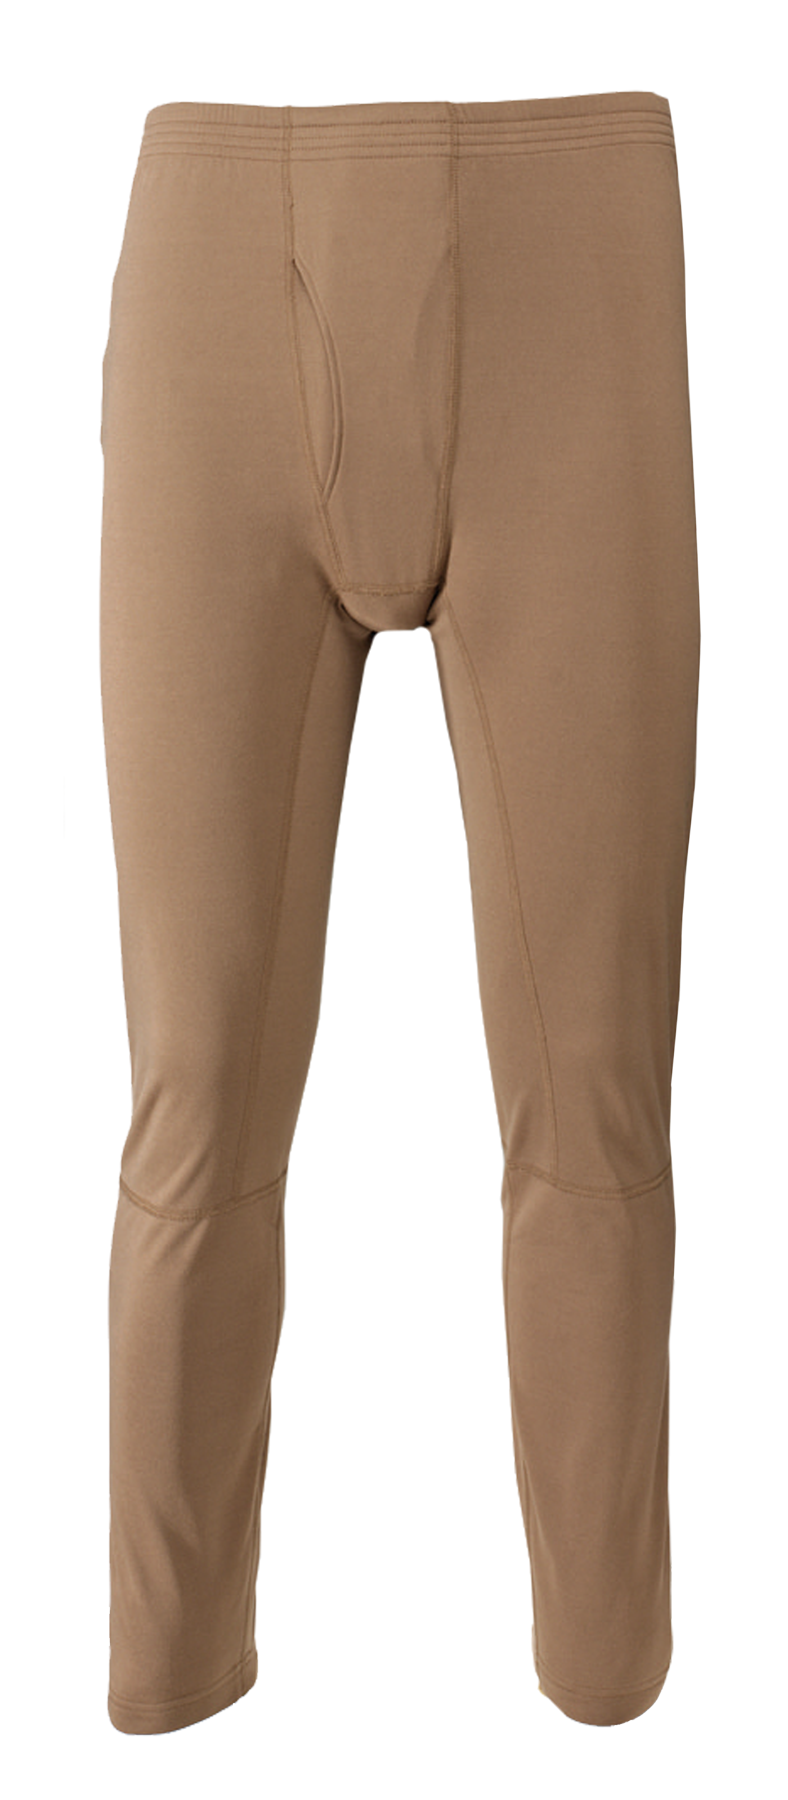 RedHead E.C.W.C.S. Military Fleece Thermal Pants for Men | Bass Pro Shops